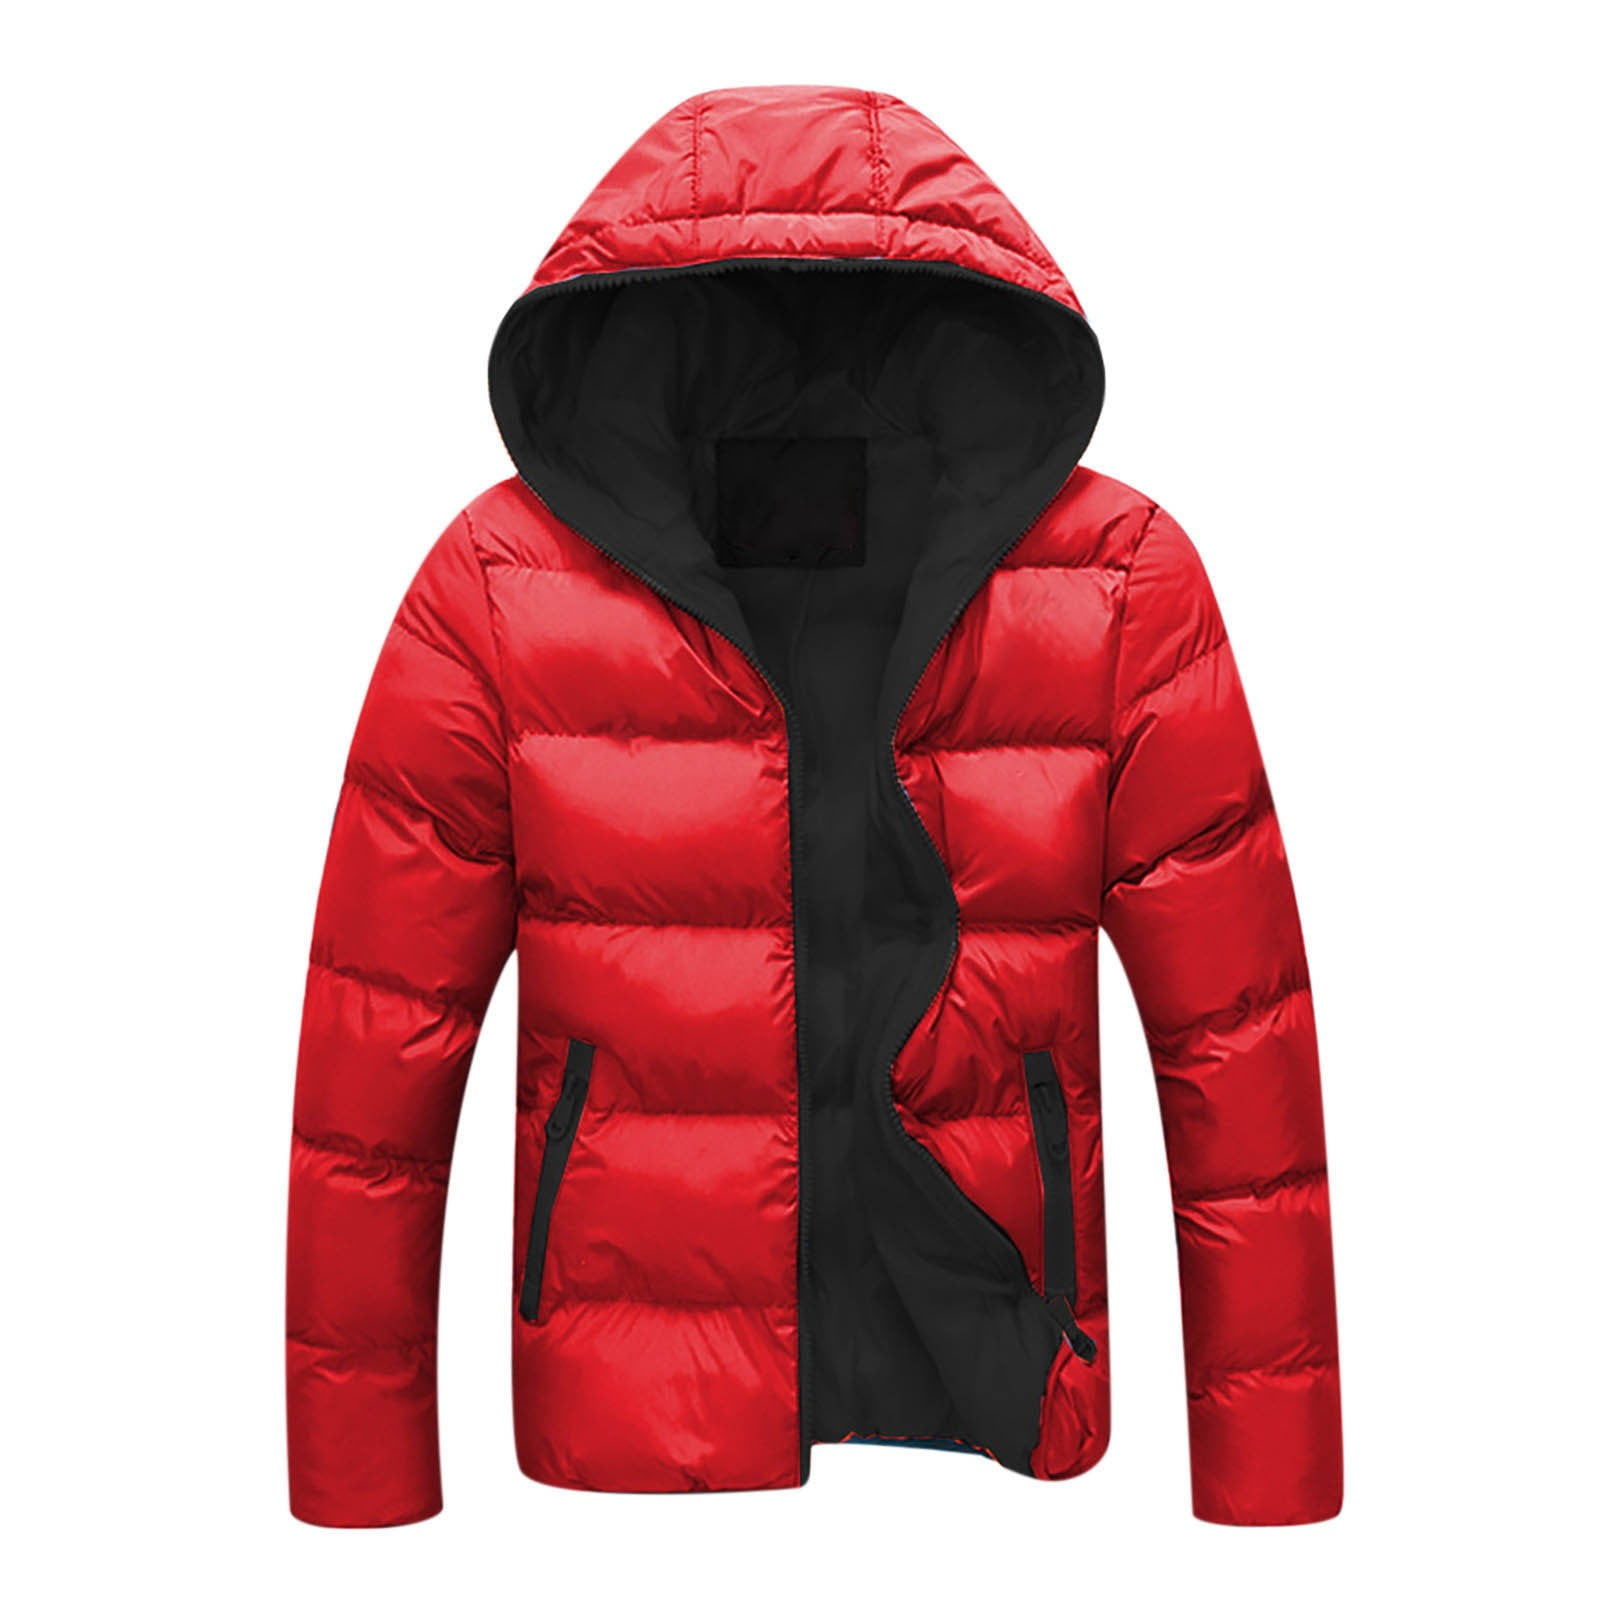 Hoodie Zip Up Winter Jacket Men Fashion Zipper Casual Windproof Loose  Outwear Jacket Windproof and warm Coat